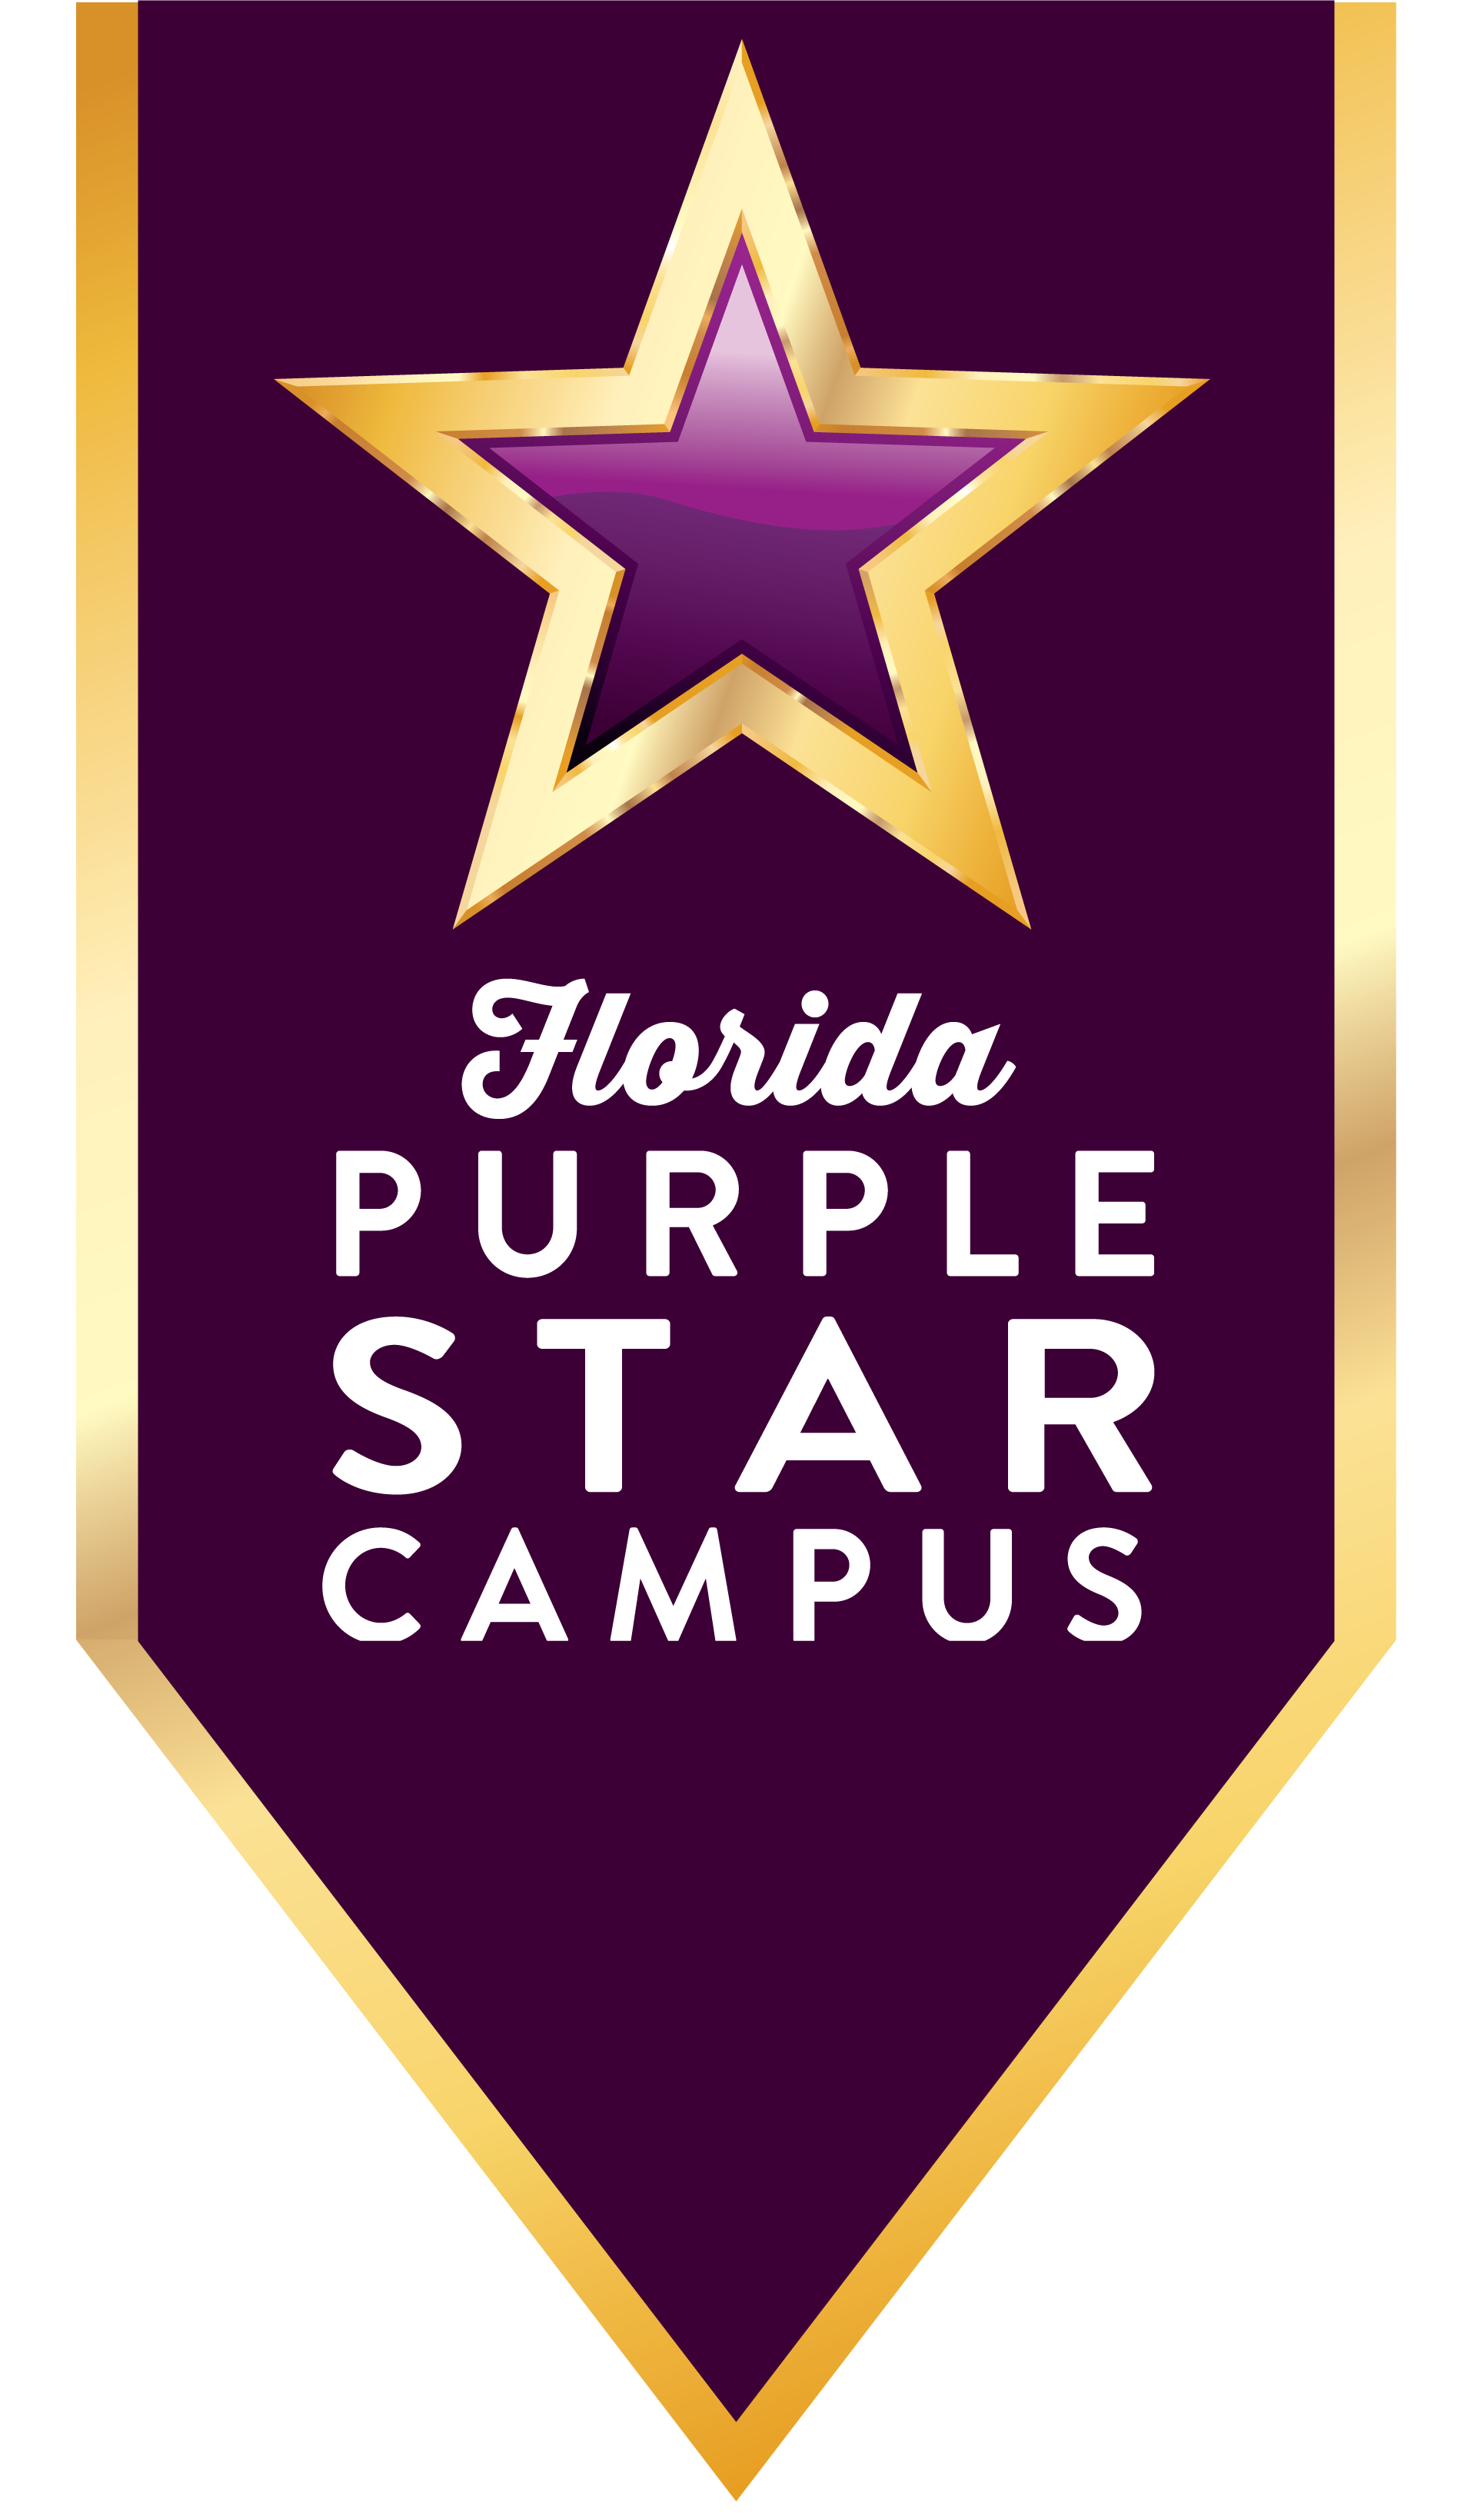 Florida Purple Star Campus